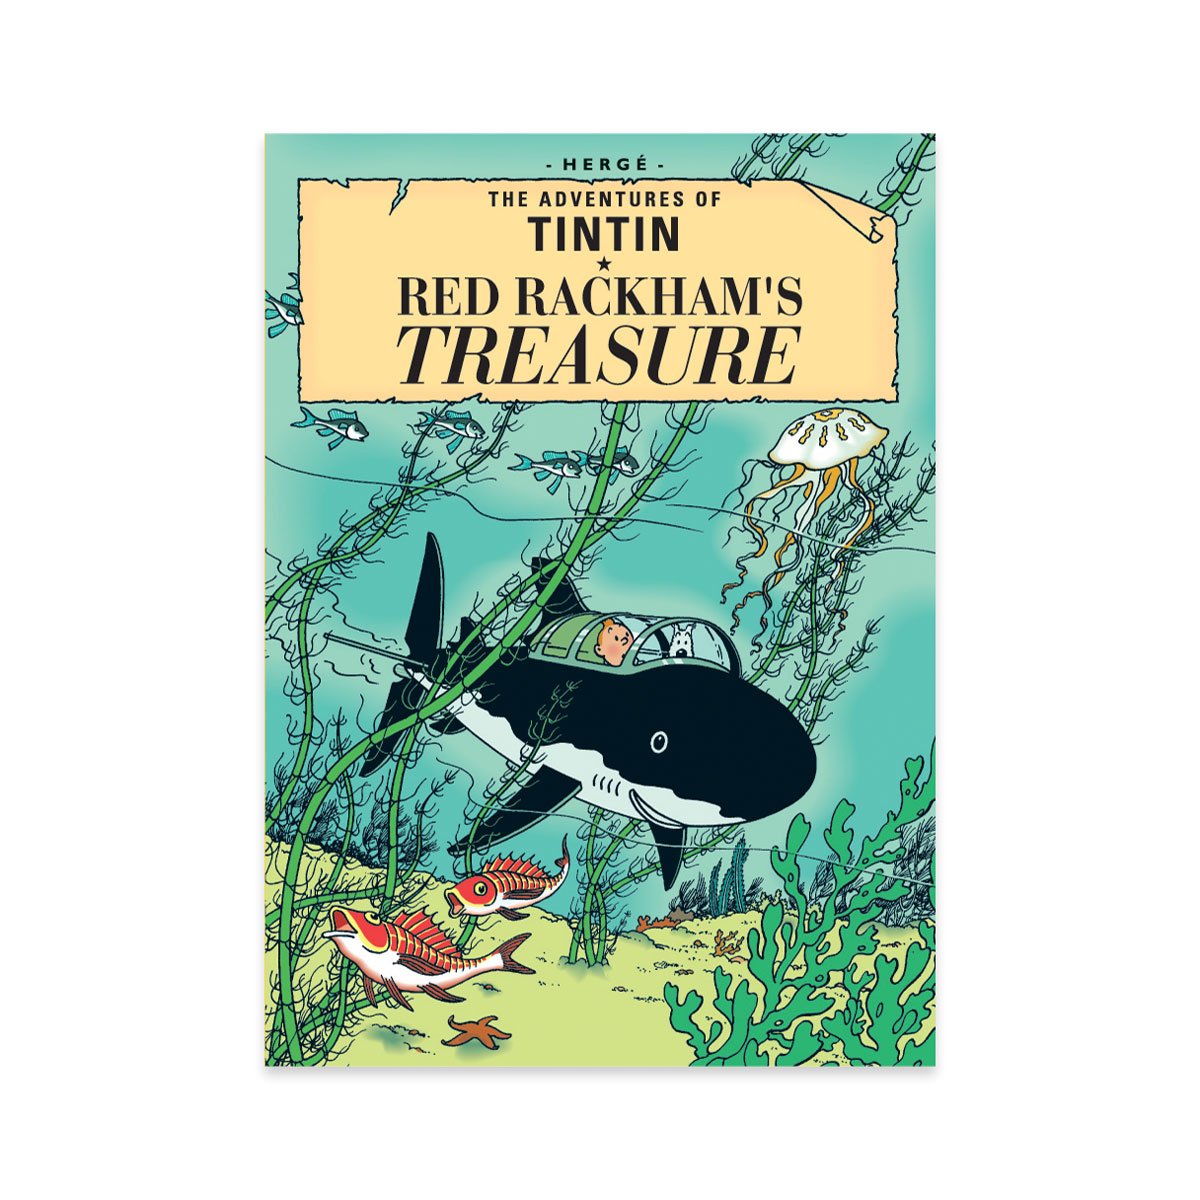 Tintin book postcards Rackham